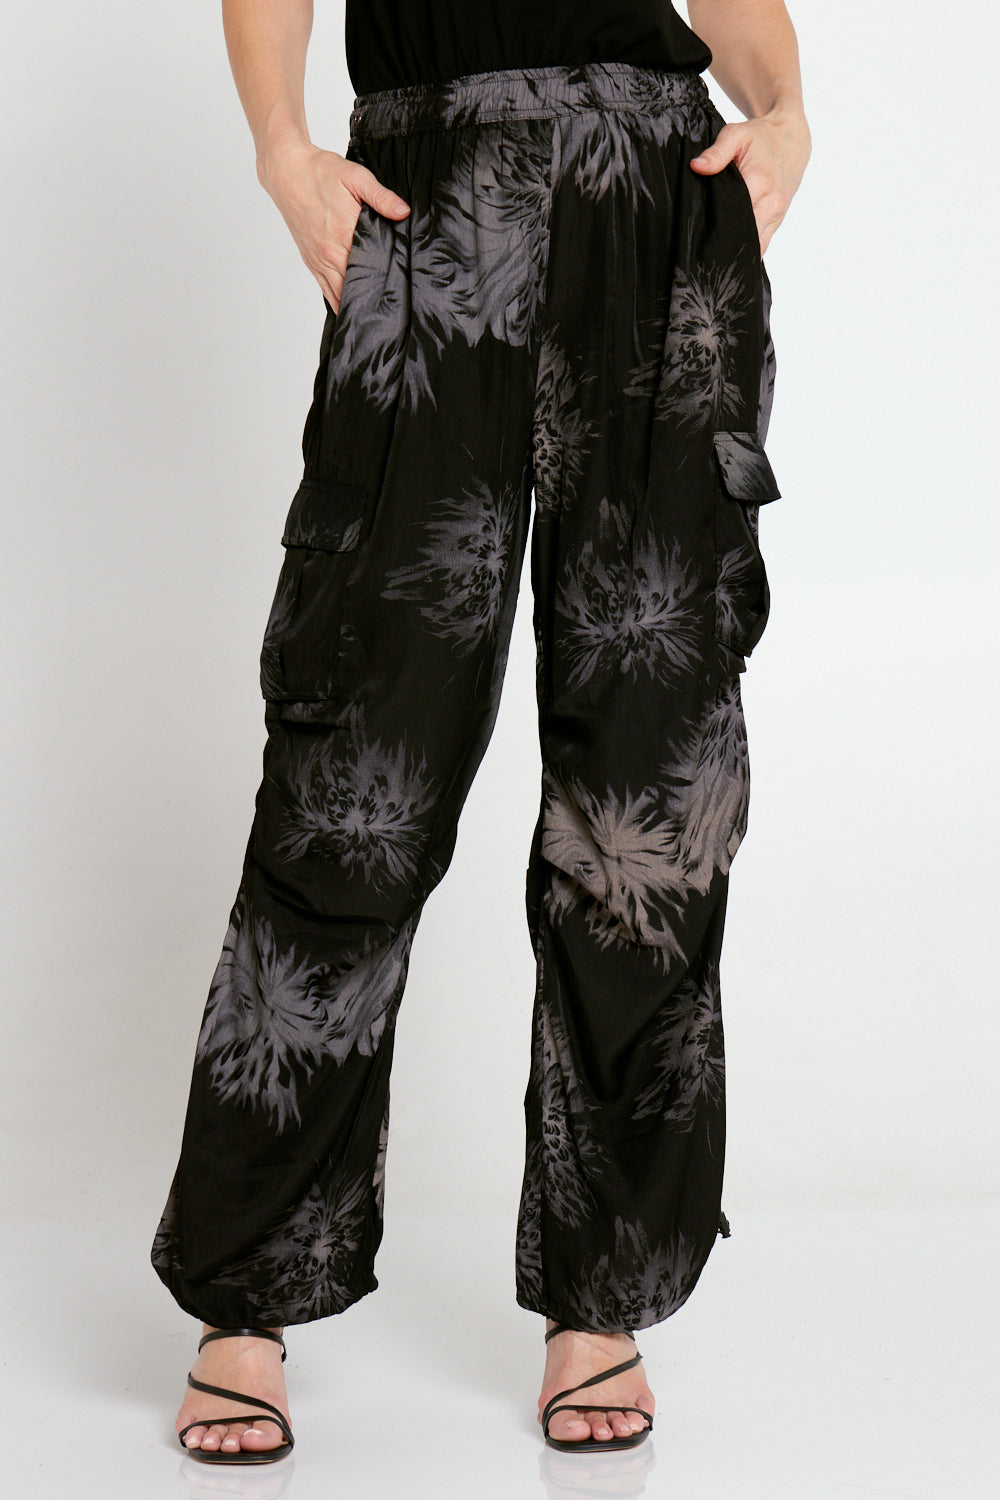 Jemima Luxe Cargo Pants - Black/Silver